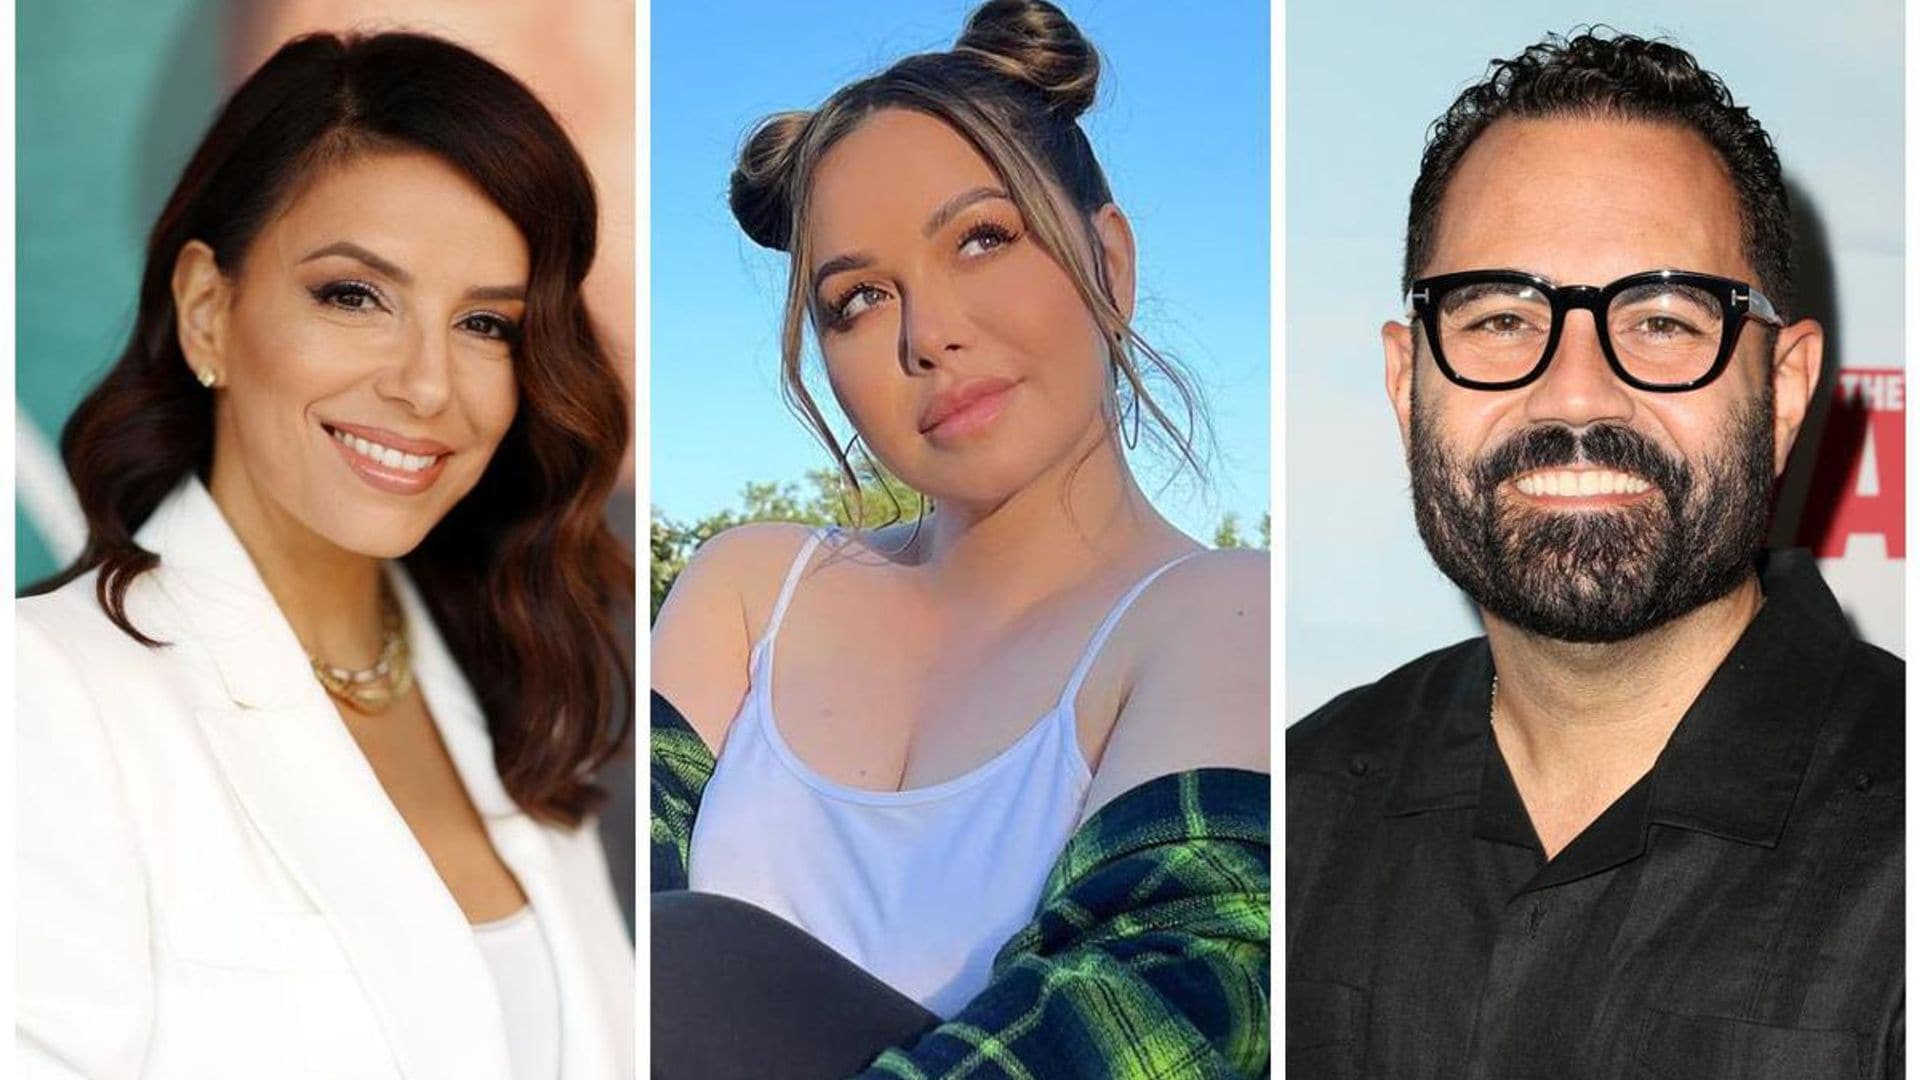 Eva Longoria, Chiquis Rivera, and Enrique Santos celebrate iHeartRadio’s My Cultura Podcast’s first anniversary